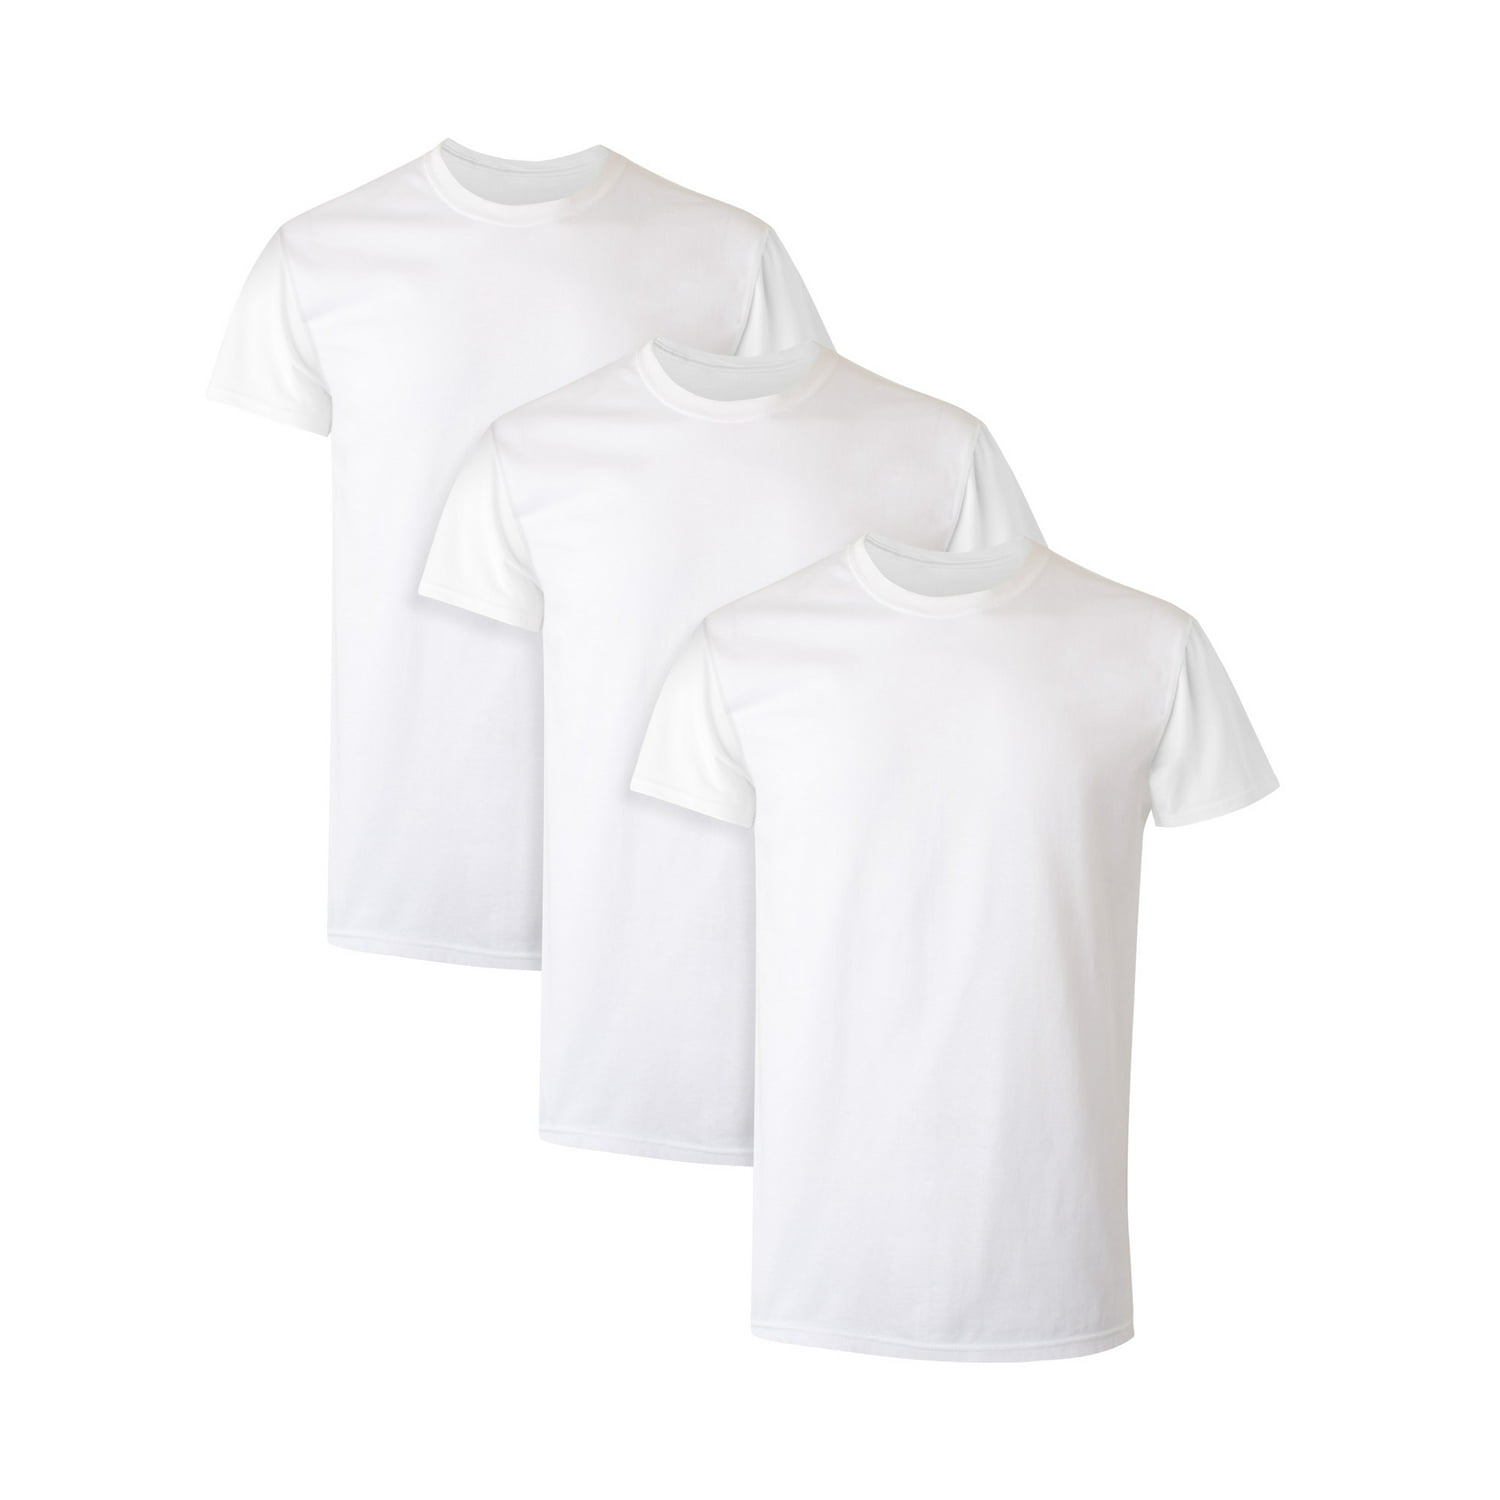 3-Pack Hanes Men's White Crew T-Shirt Undershirts (Sizes S - 3XL) $11 + Free S&H w/ Walmart+ or $35+